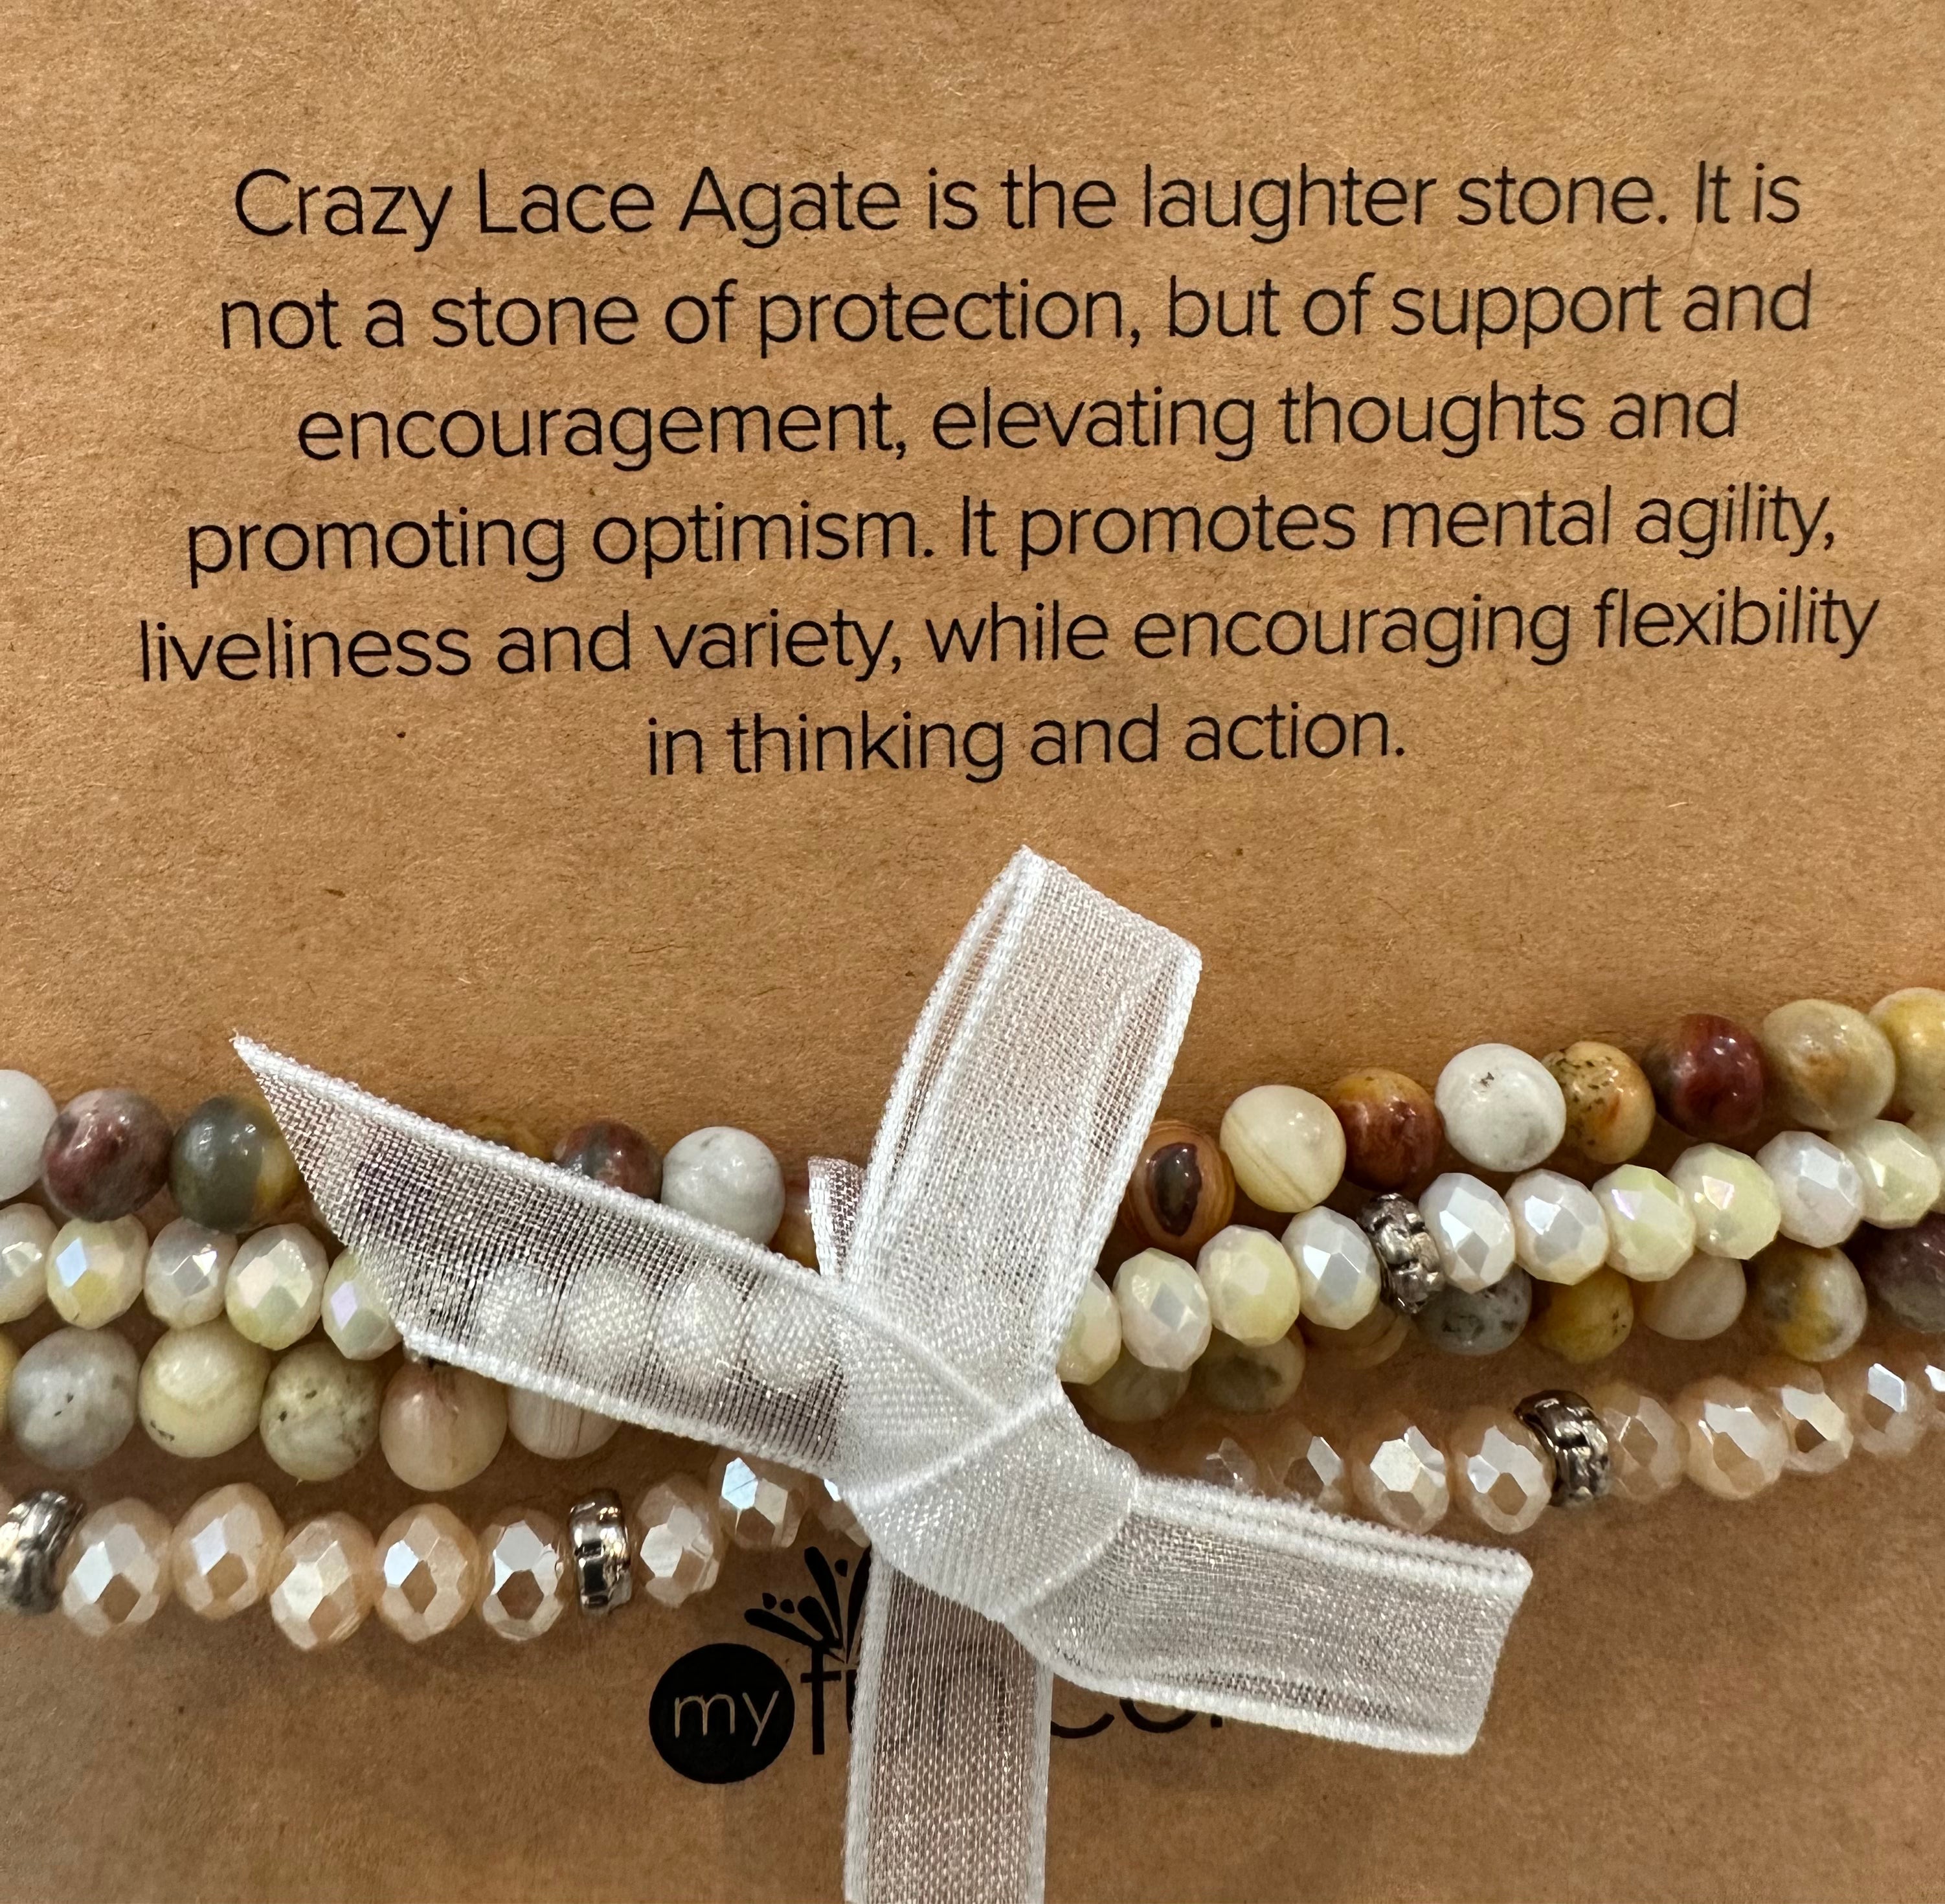 Crazy Lace Agate Mini Gemstone & Crystal Bracelet Set